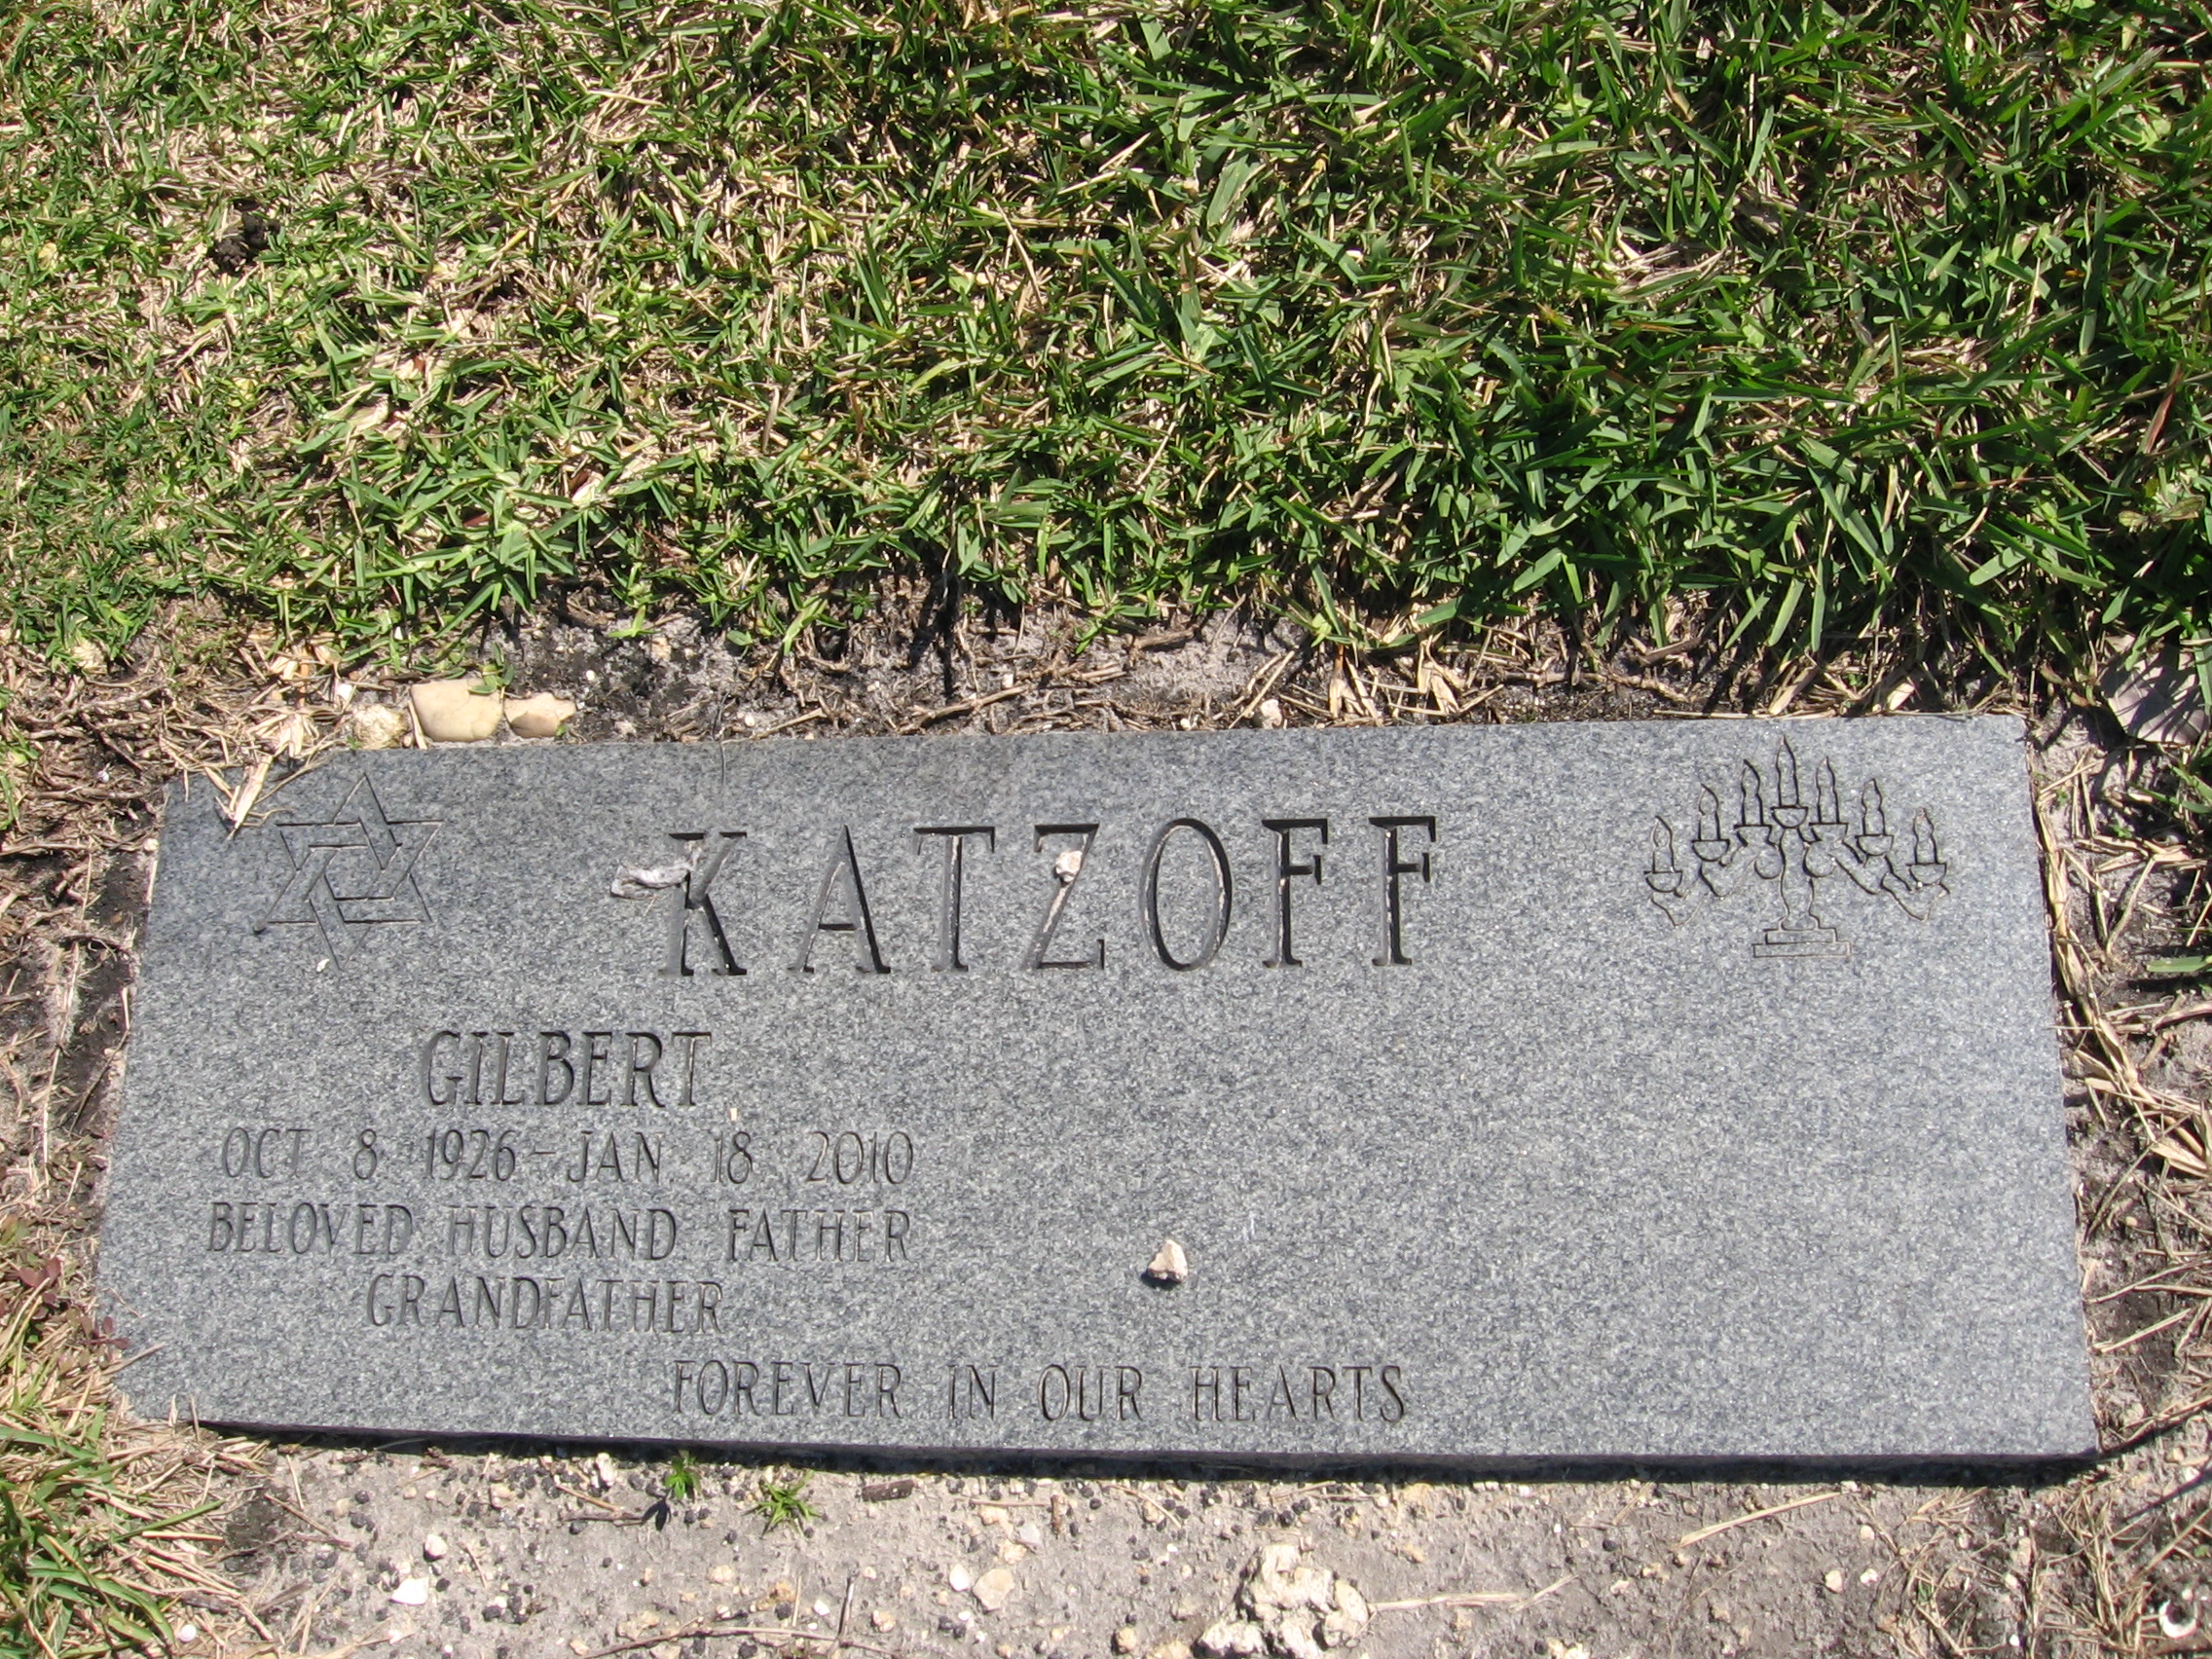 Gilbert Katzoff